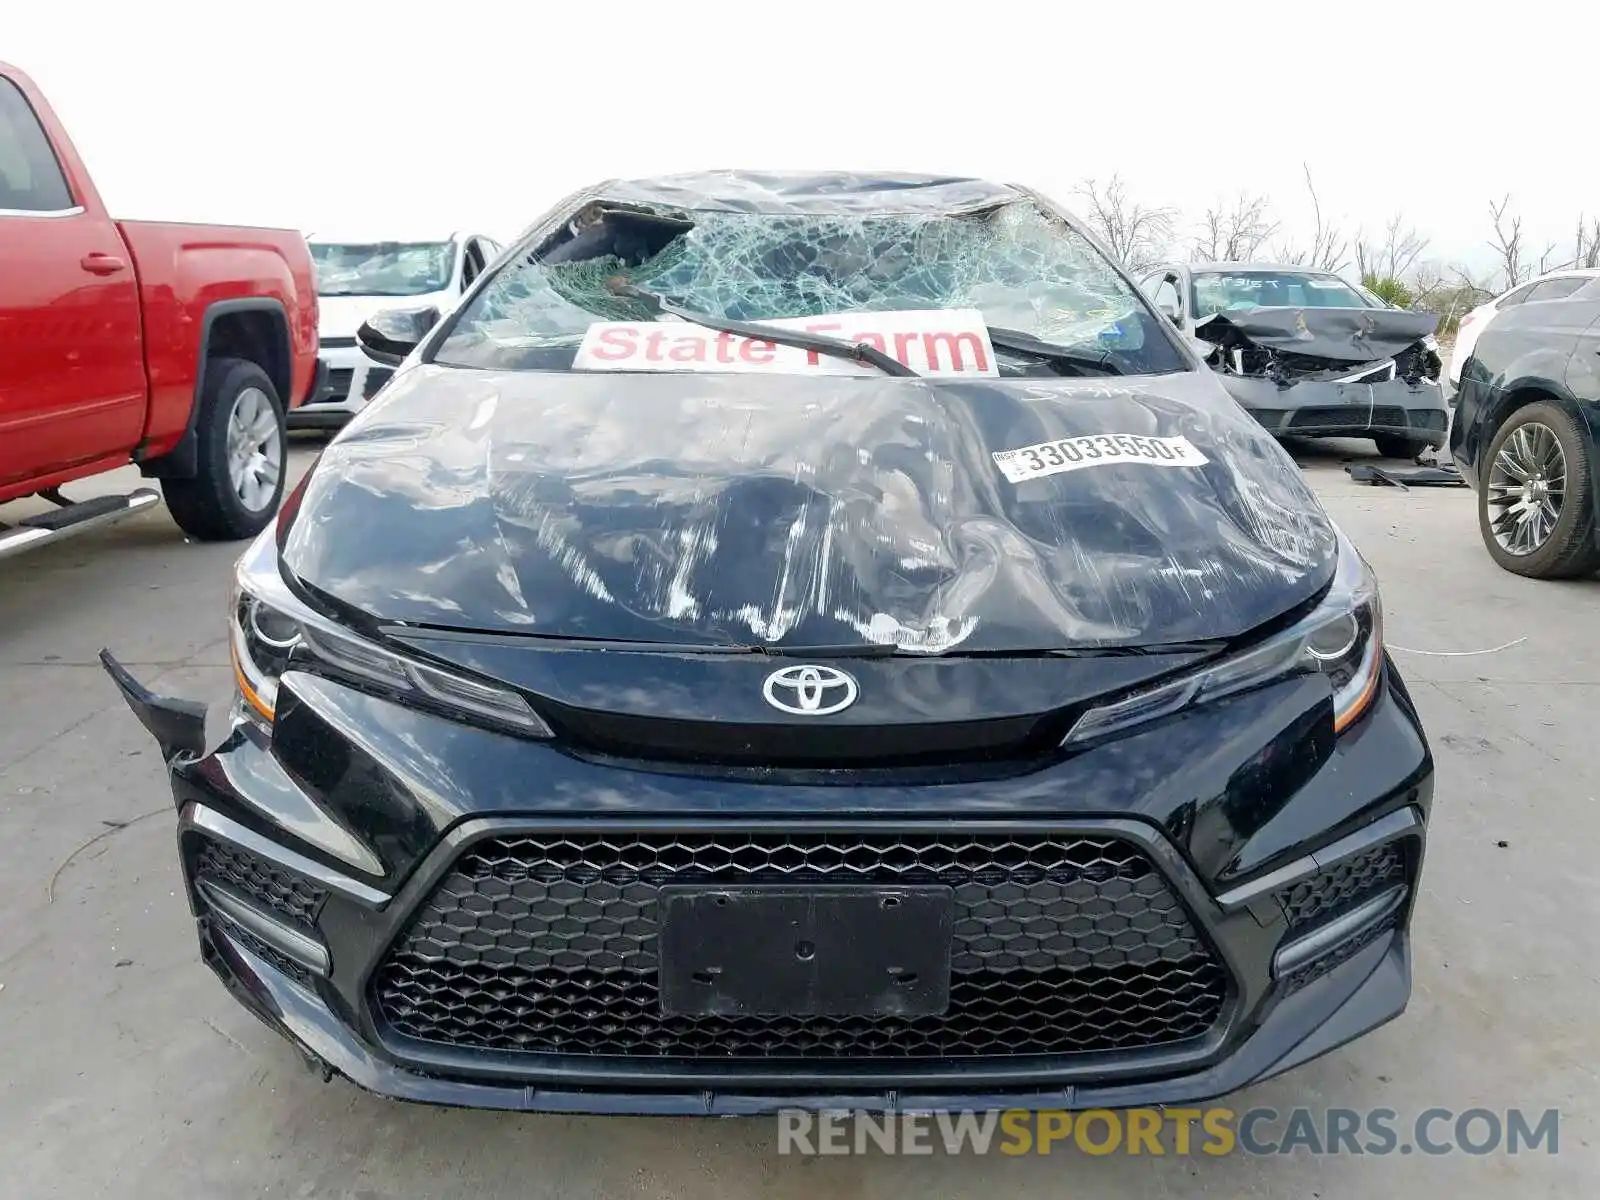 9 Photograph of a damaged car JTDS4RCE1LJ040210 TOYOTA COROLLA 2020